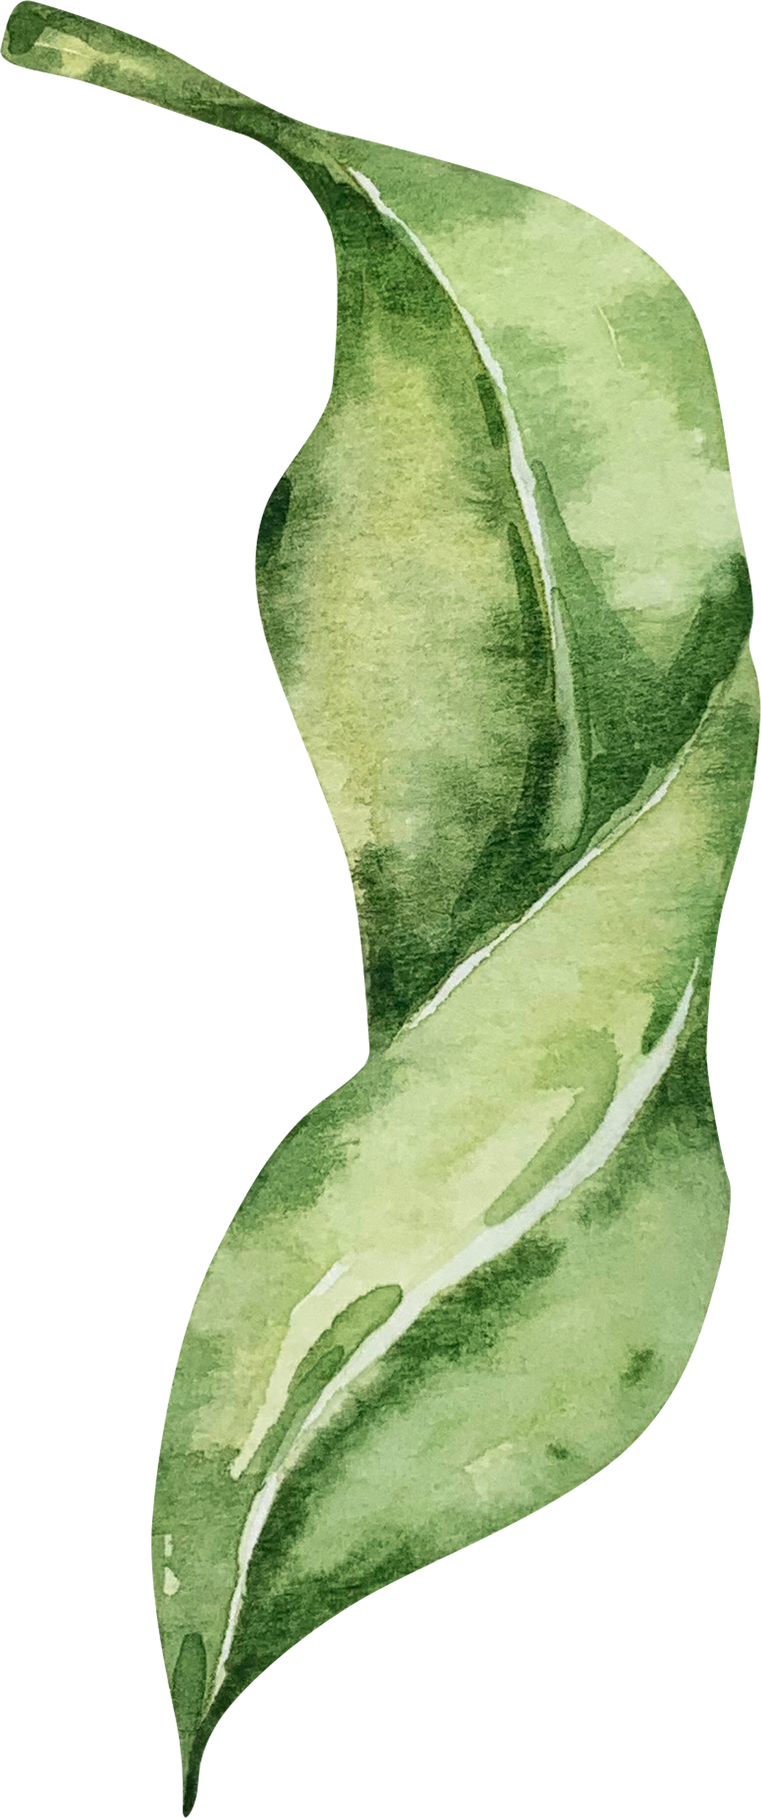 Watercolor green leaf of lemon tree